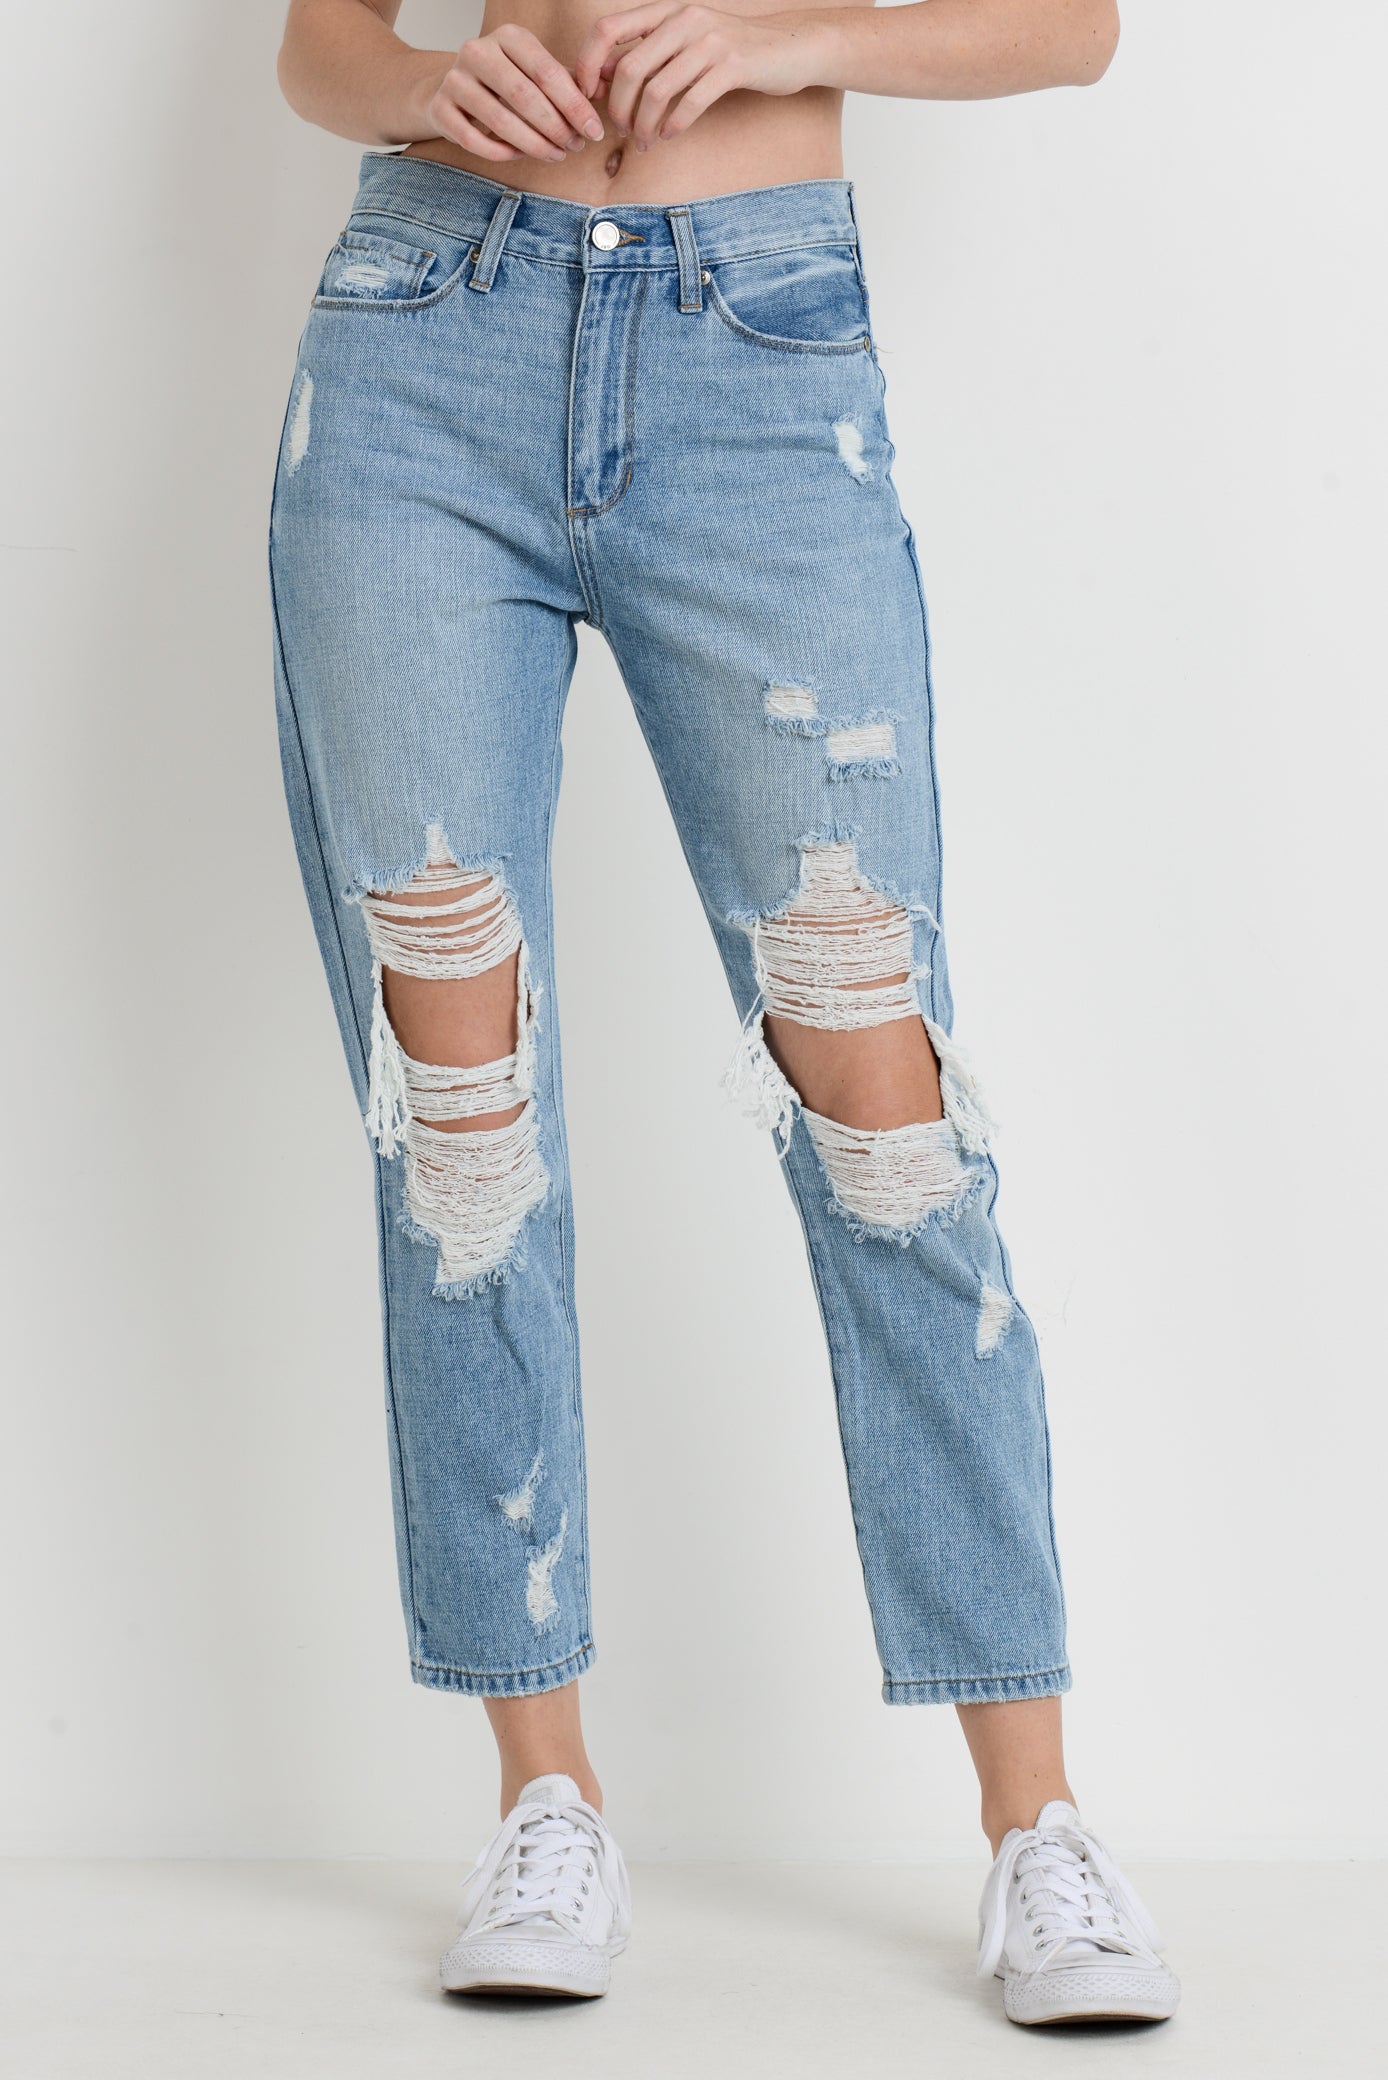 straight leg jeans asda